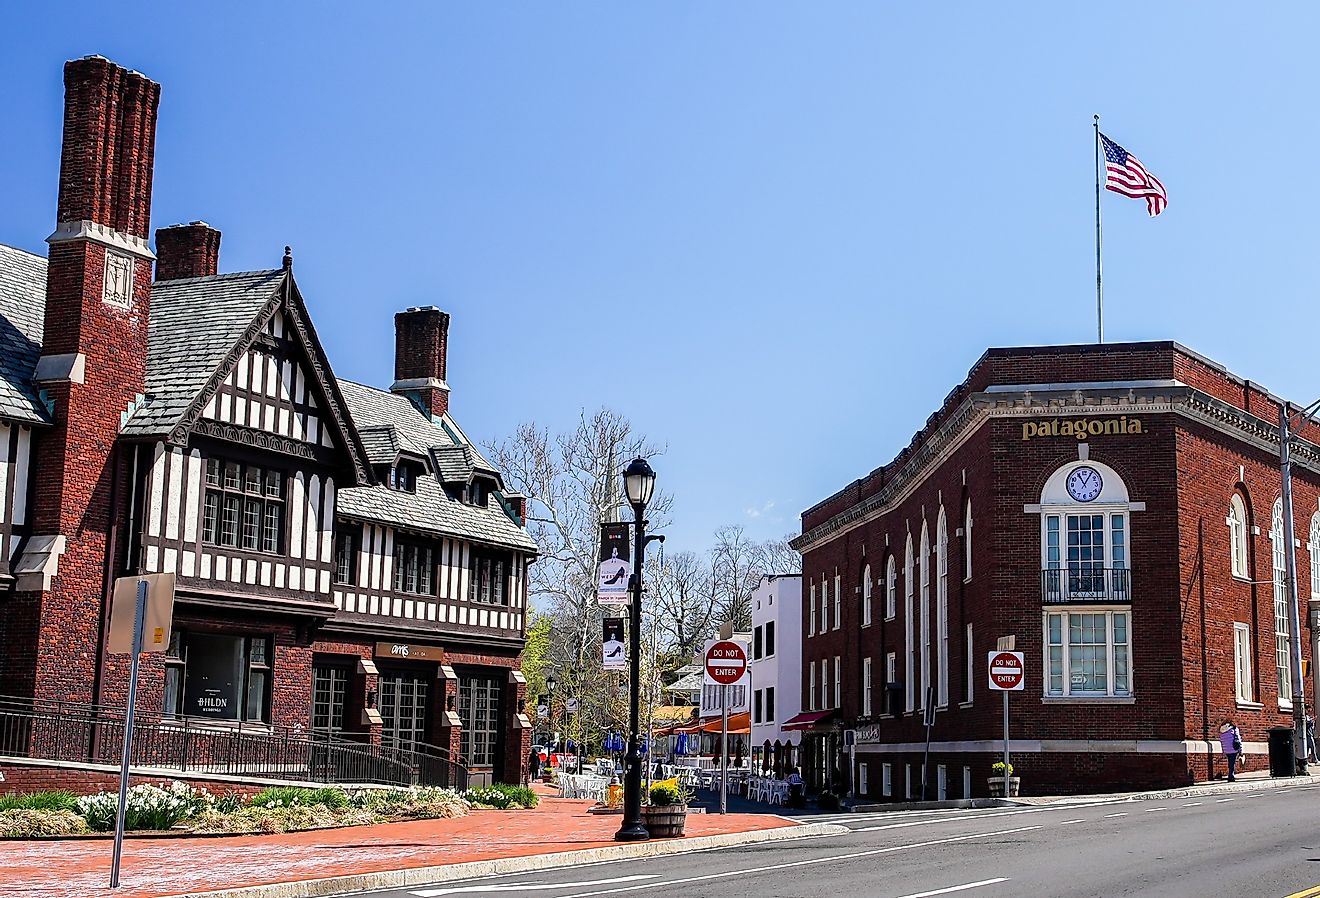 Downtown streets of Westport, Connecticut. Image credit Miro Vrlik Photography via Shutterstock